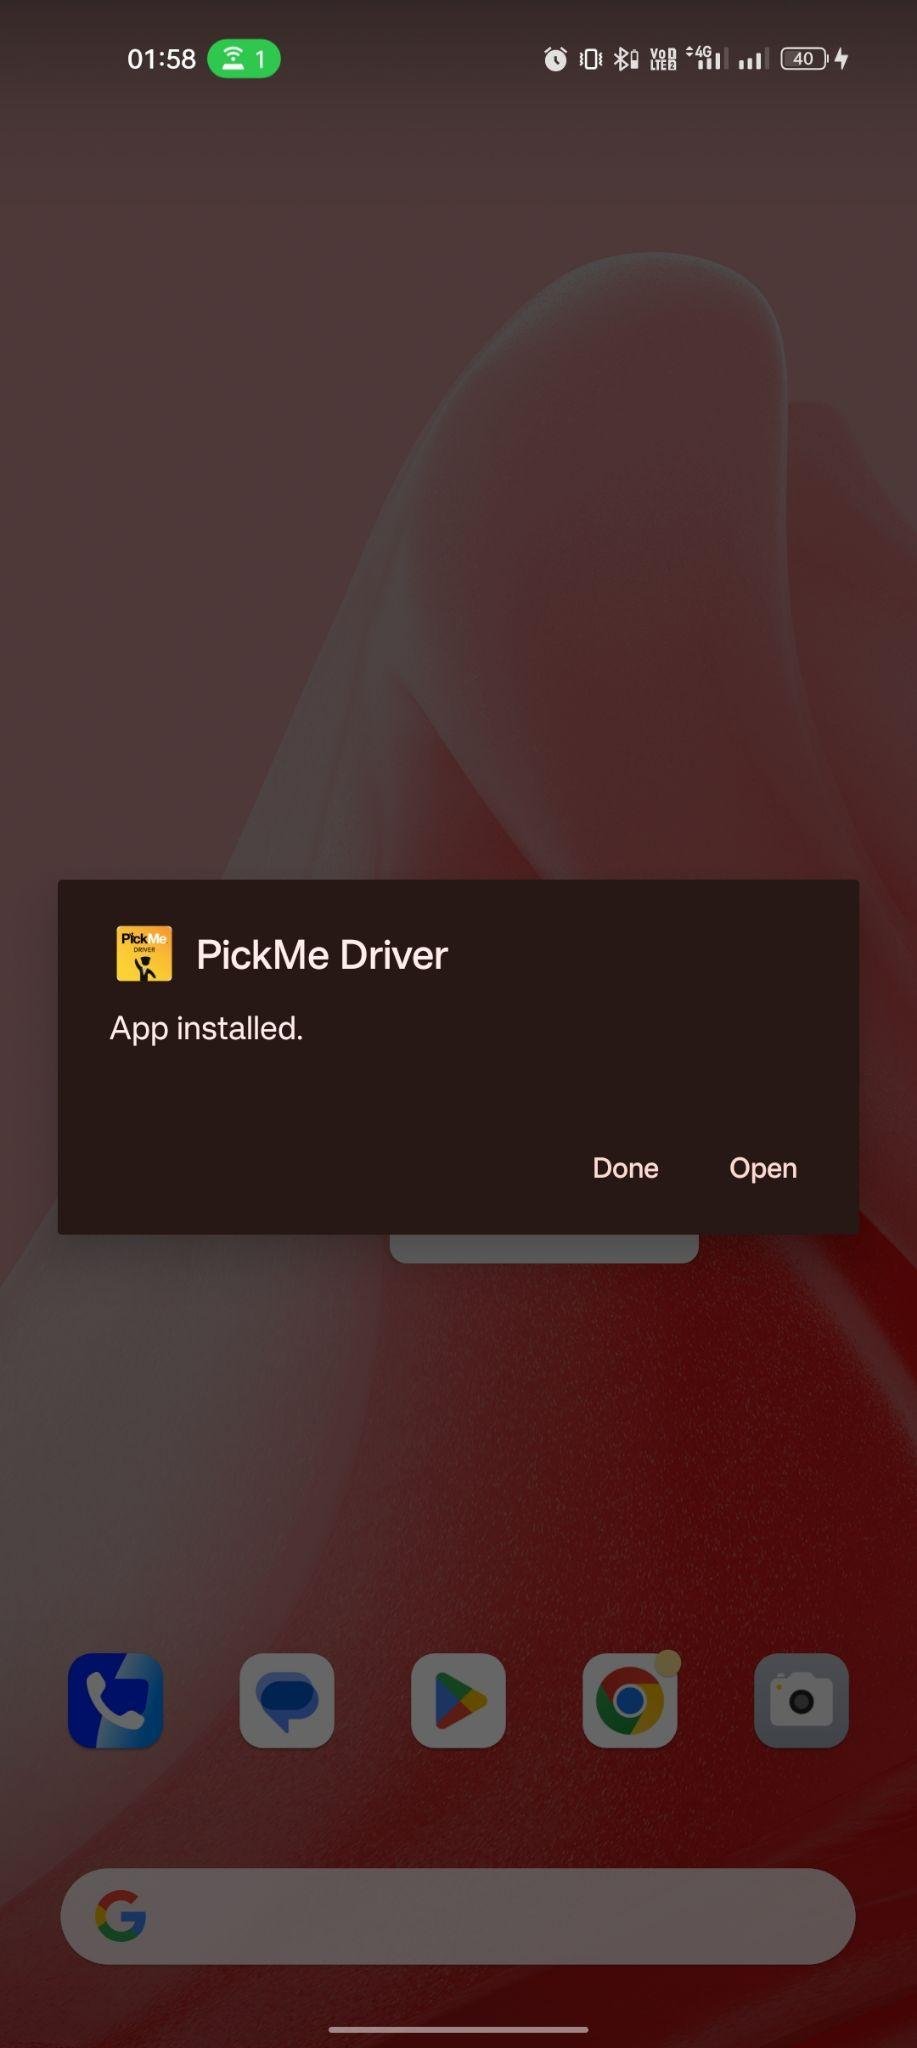 PickMe Driver apk installed